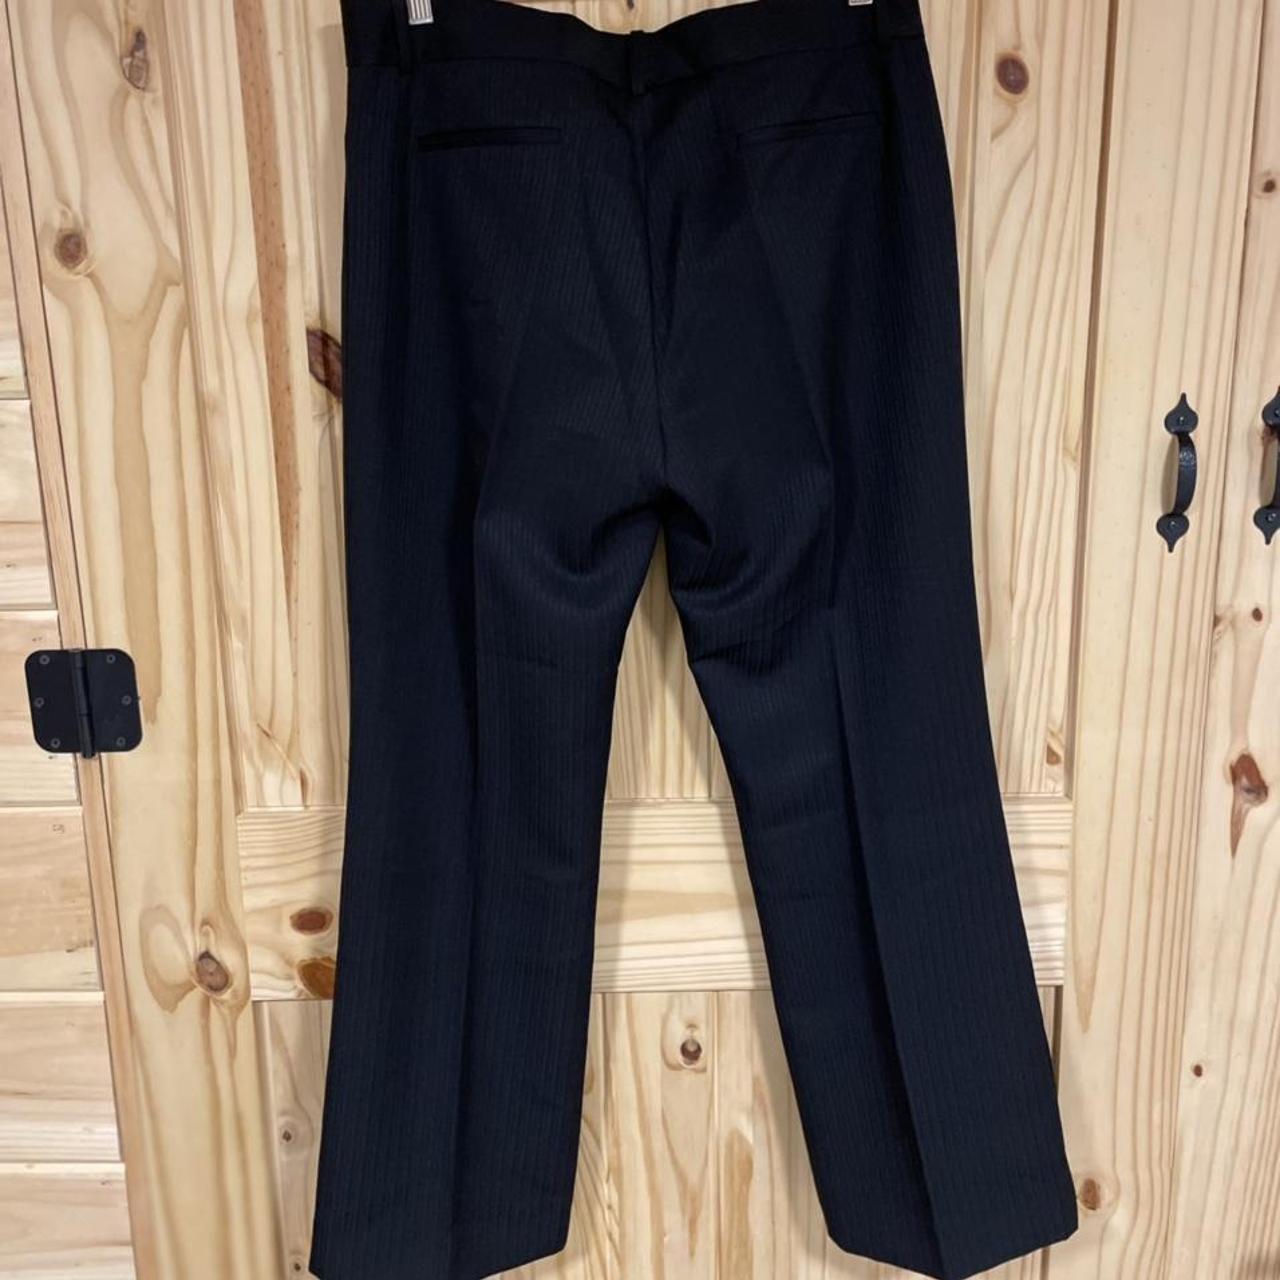 Tahari Blazer Pants Suit Set ASL Petites size 12P - Depop